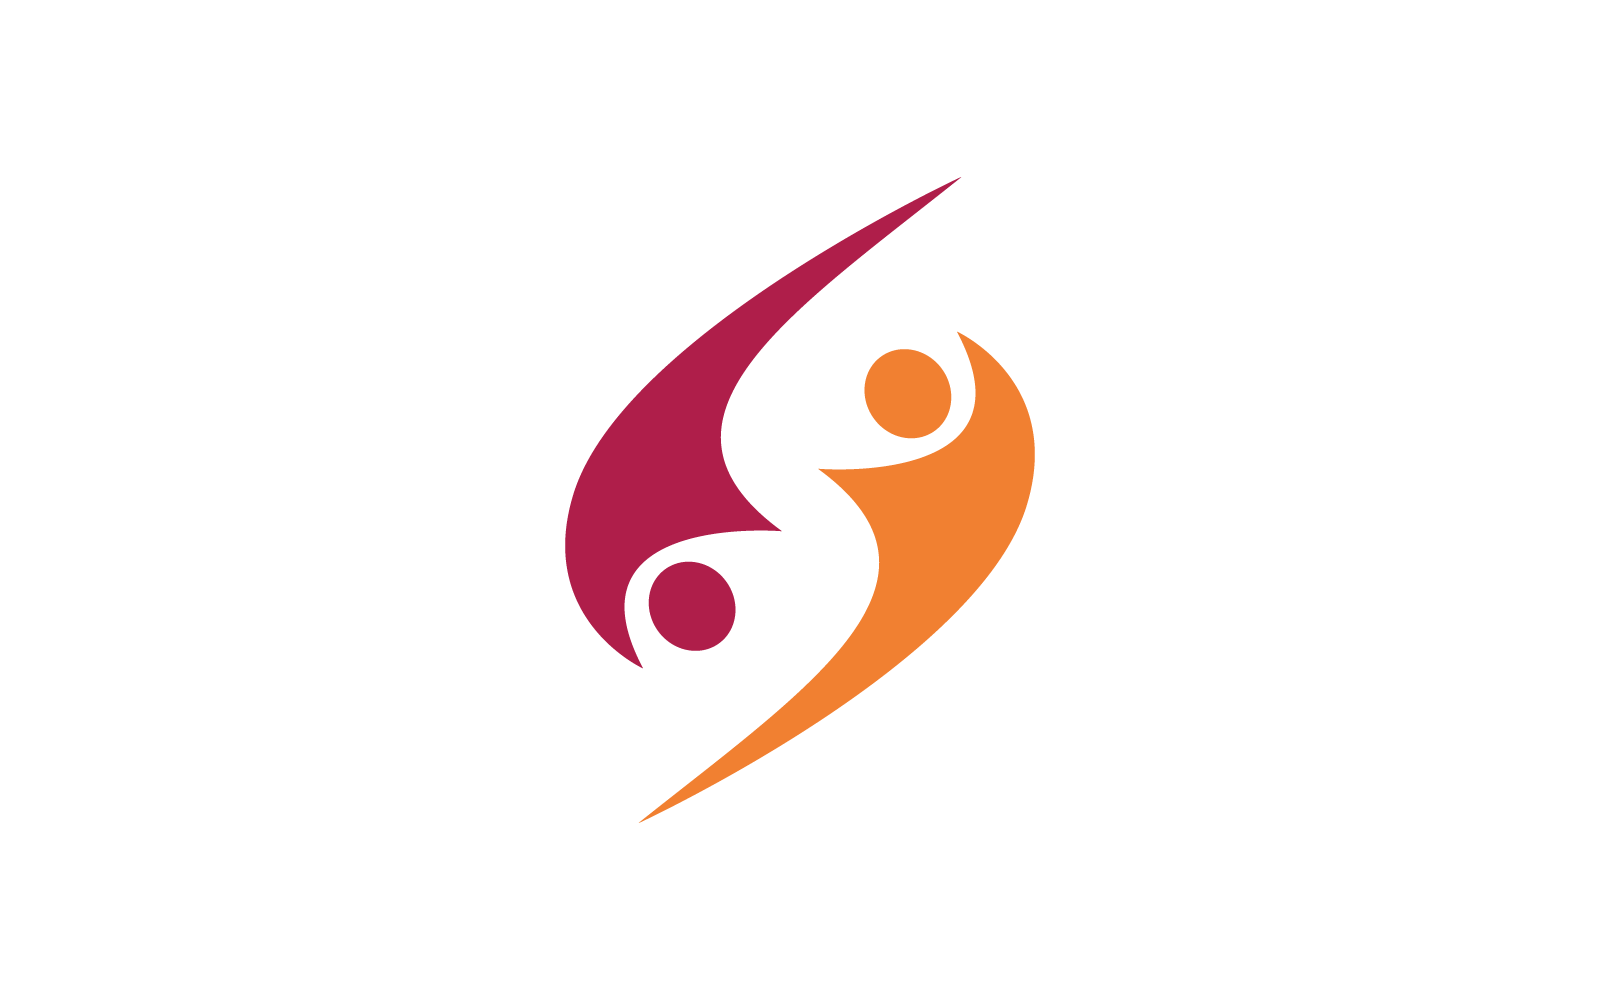 Design Community, network and social logo vector Logo Template